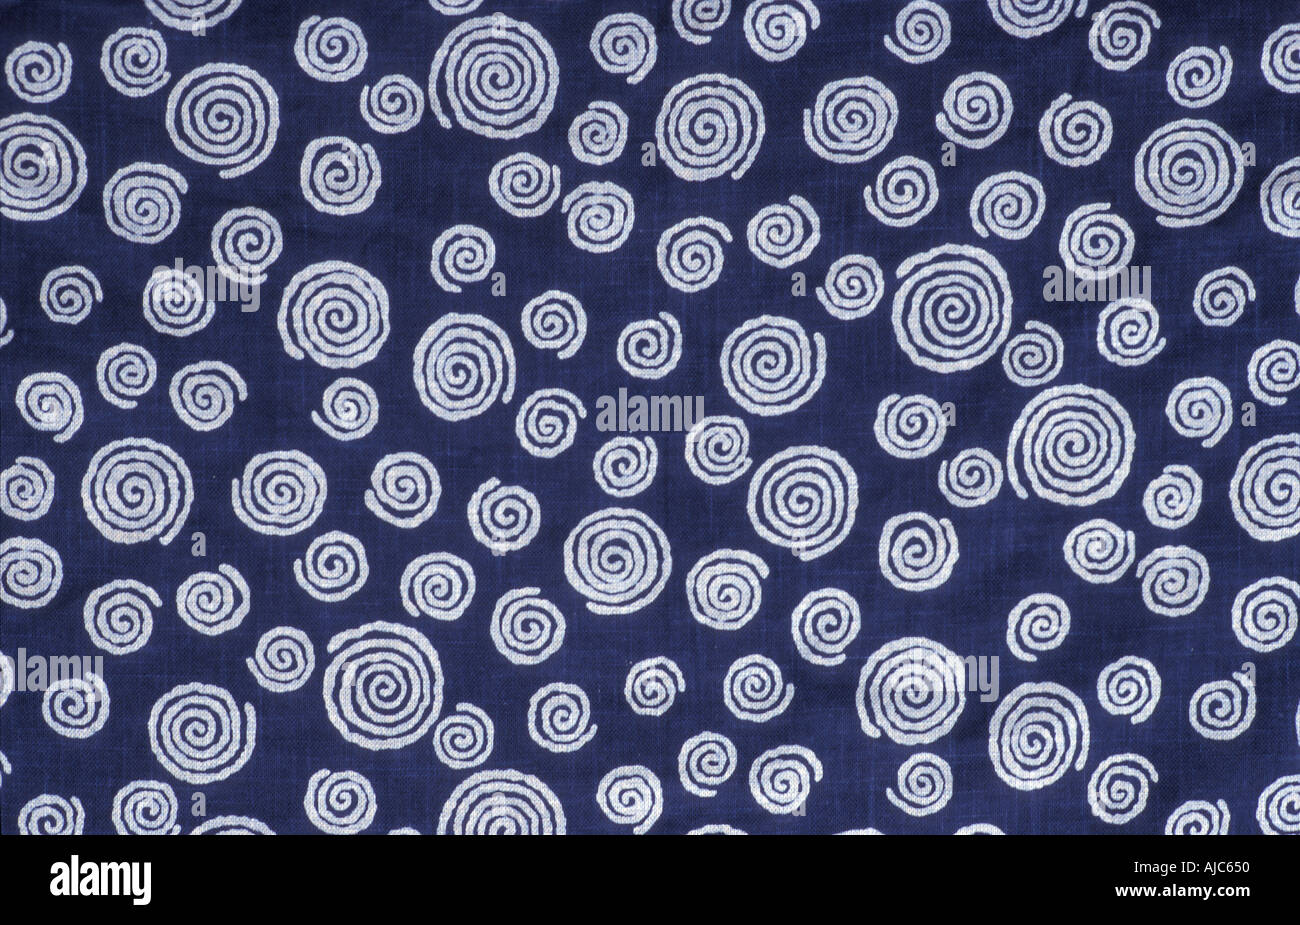 Indigo batik fabric with spiral patterning Japan Stock Photo